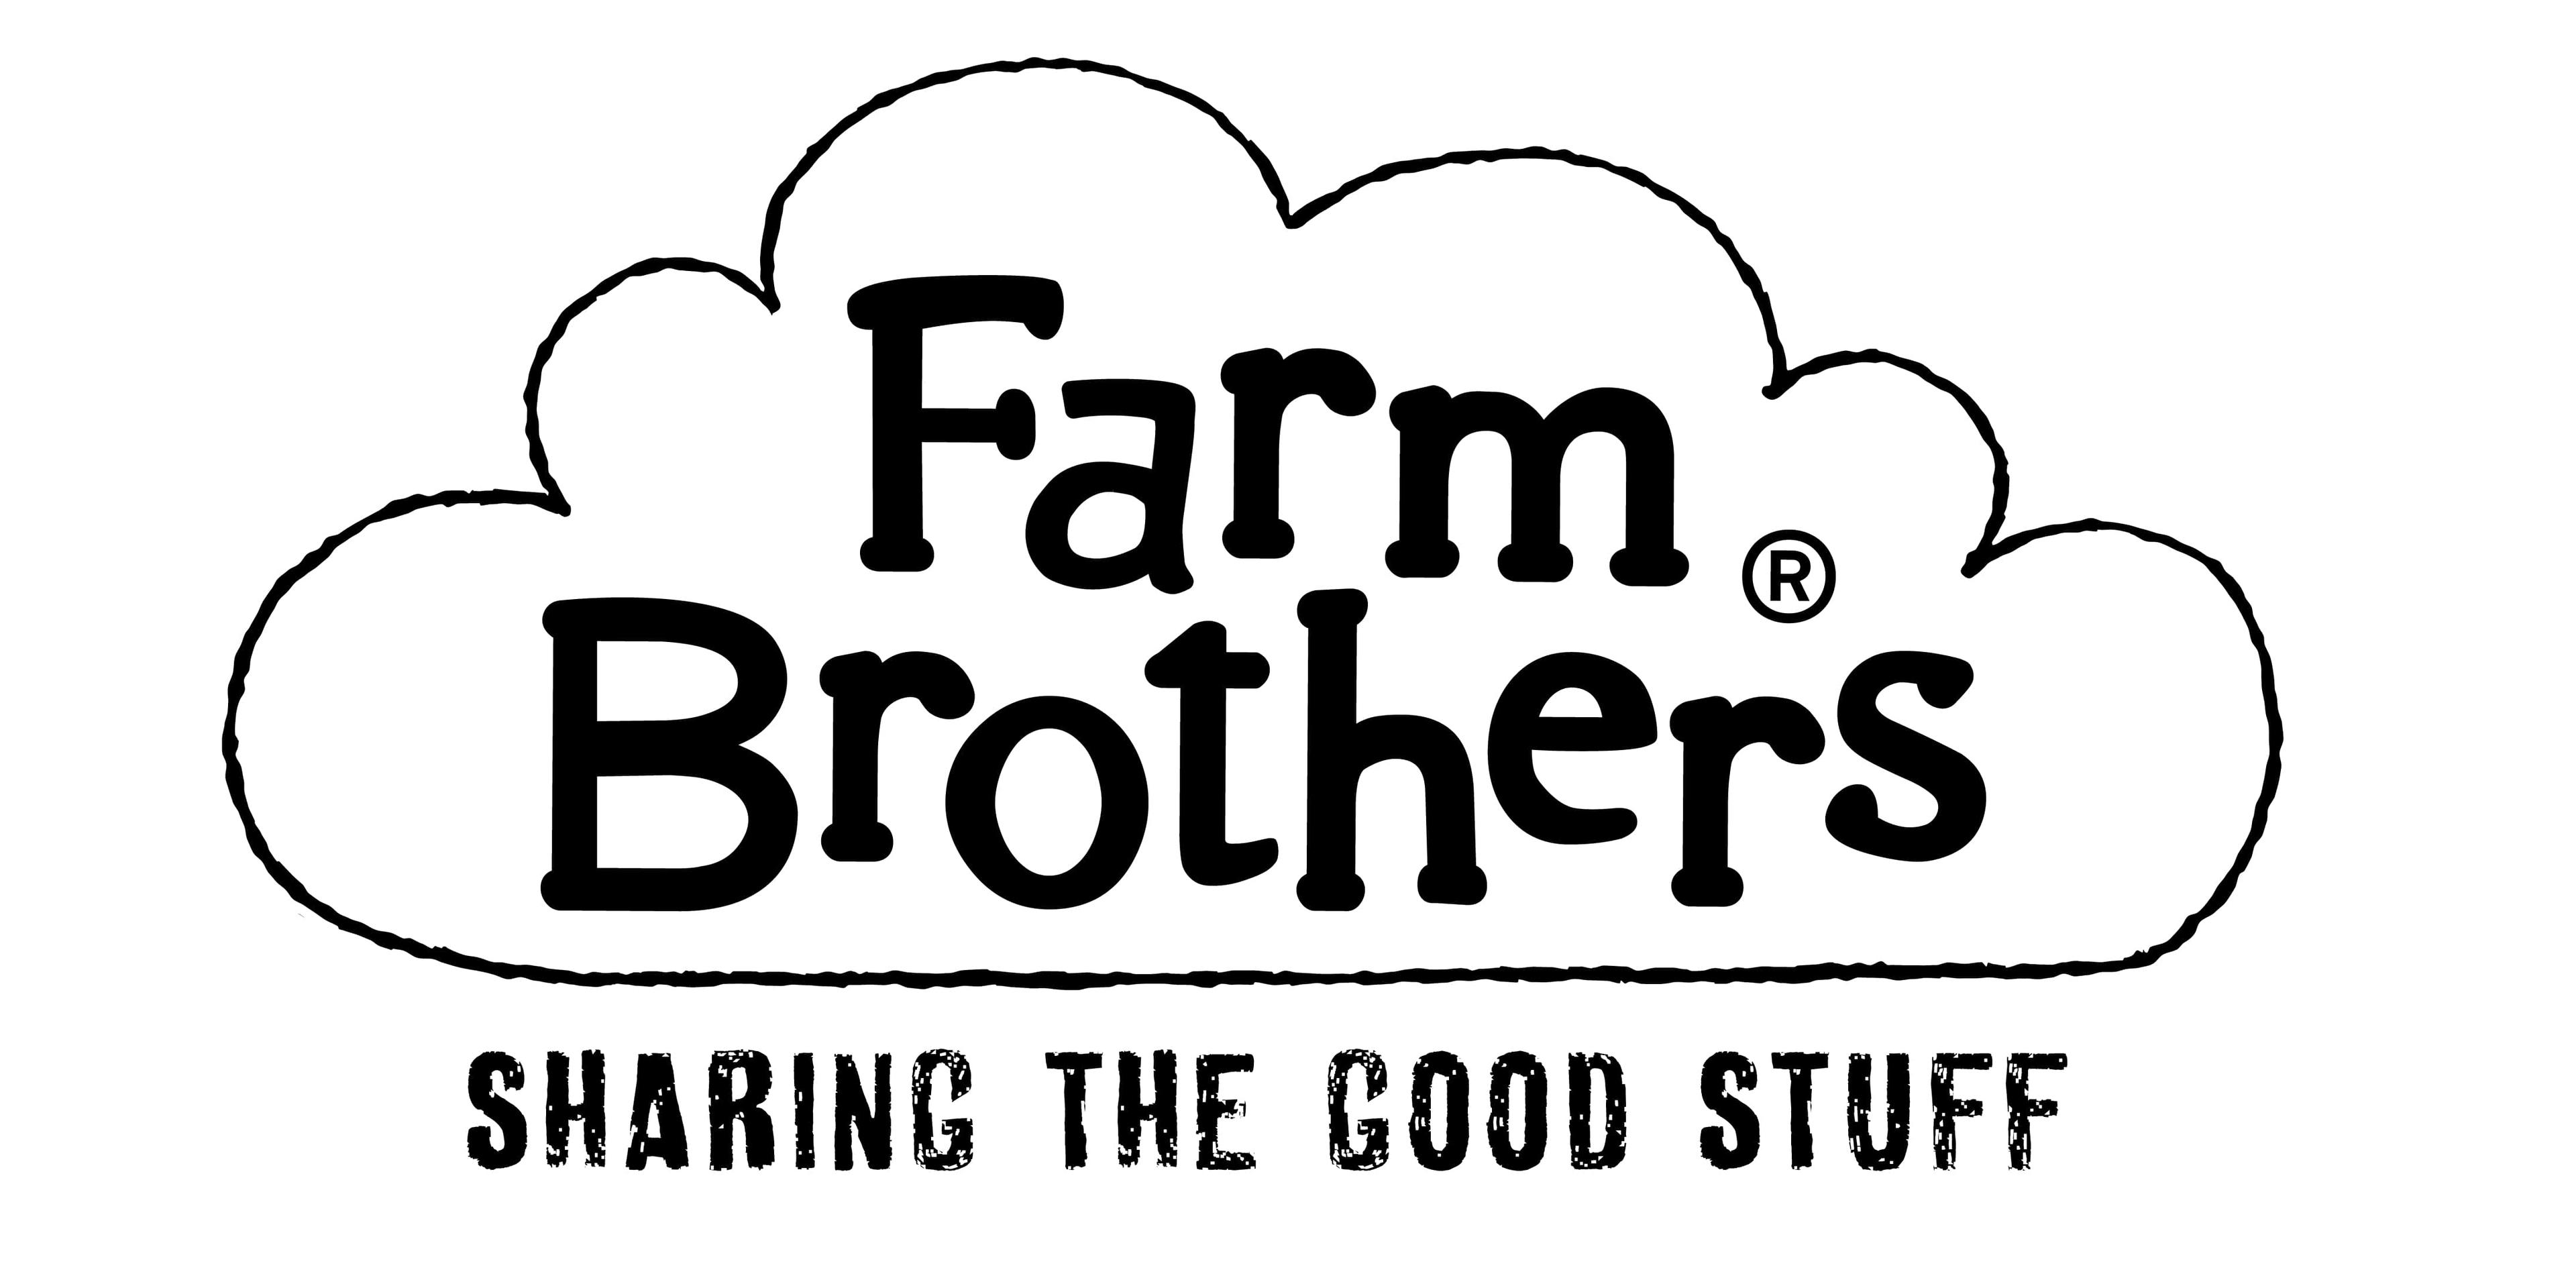 Farm Brothers logo